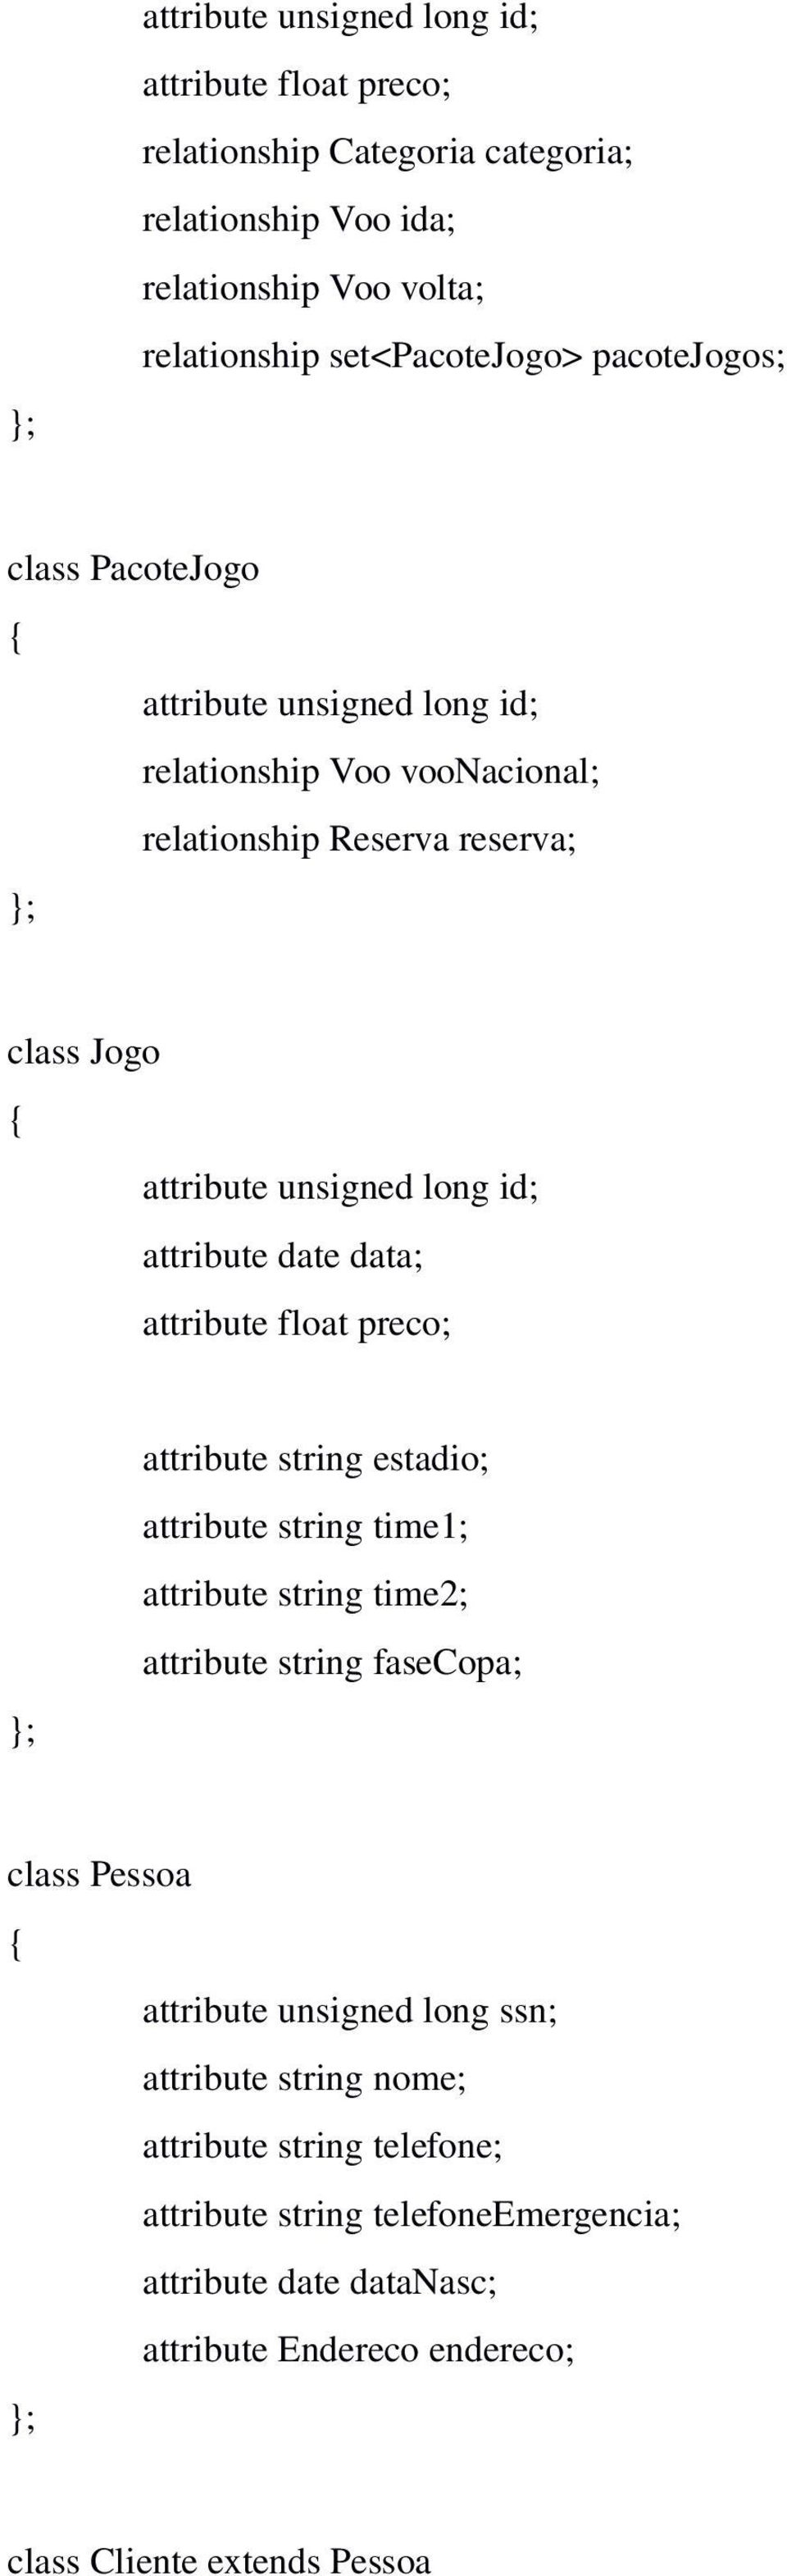 date data; attribute float preco; attribute string estadio; attribute string time1; attribute string time2; attribute string fasecopa; class Pessoa attribute unsigned